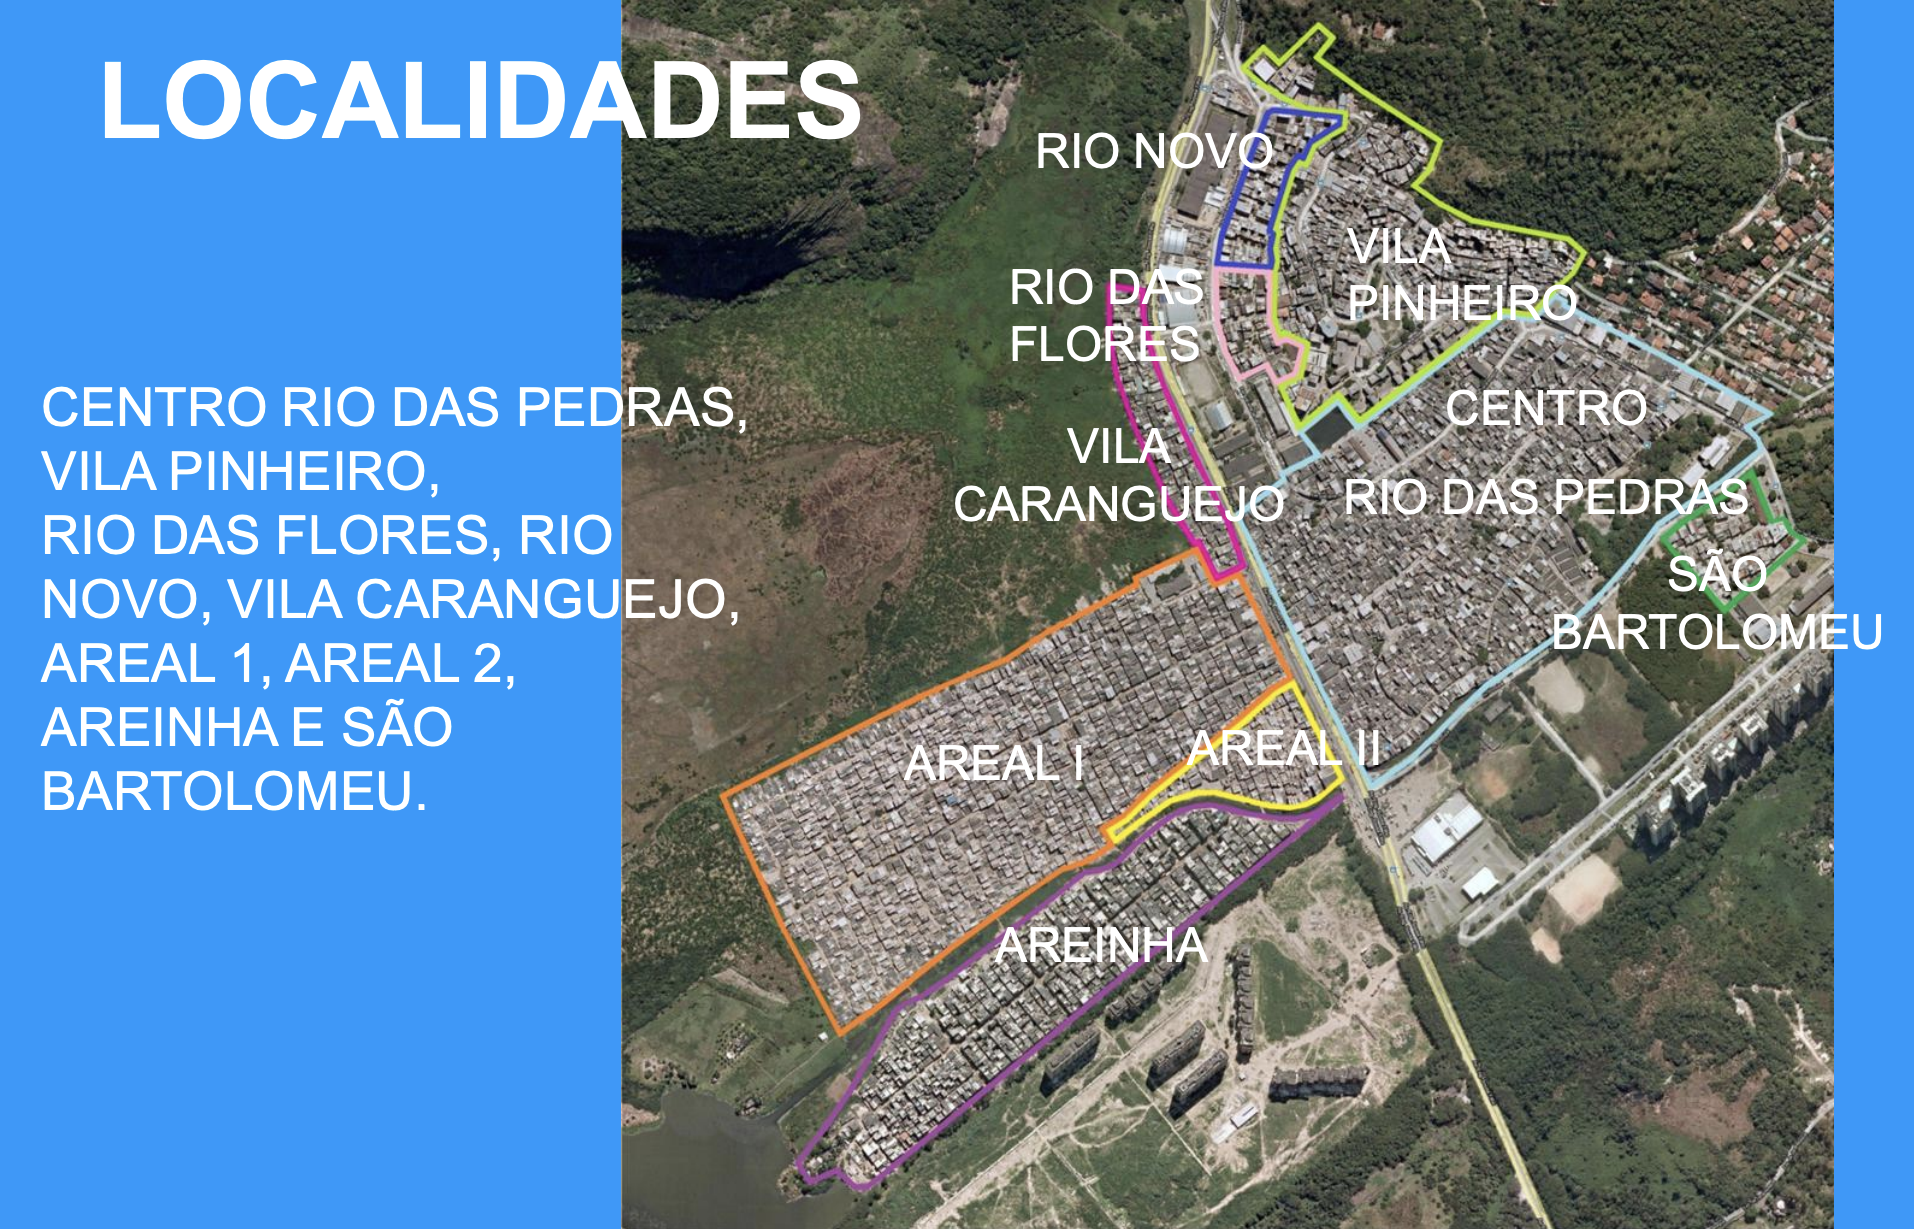 Subdivisions of Rio das Pedras